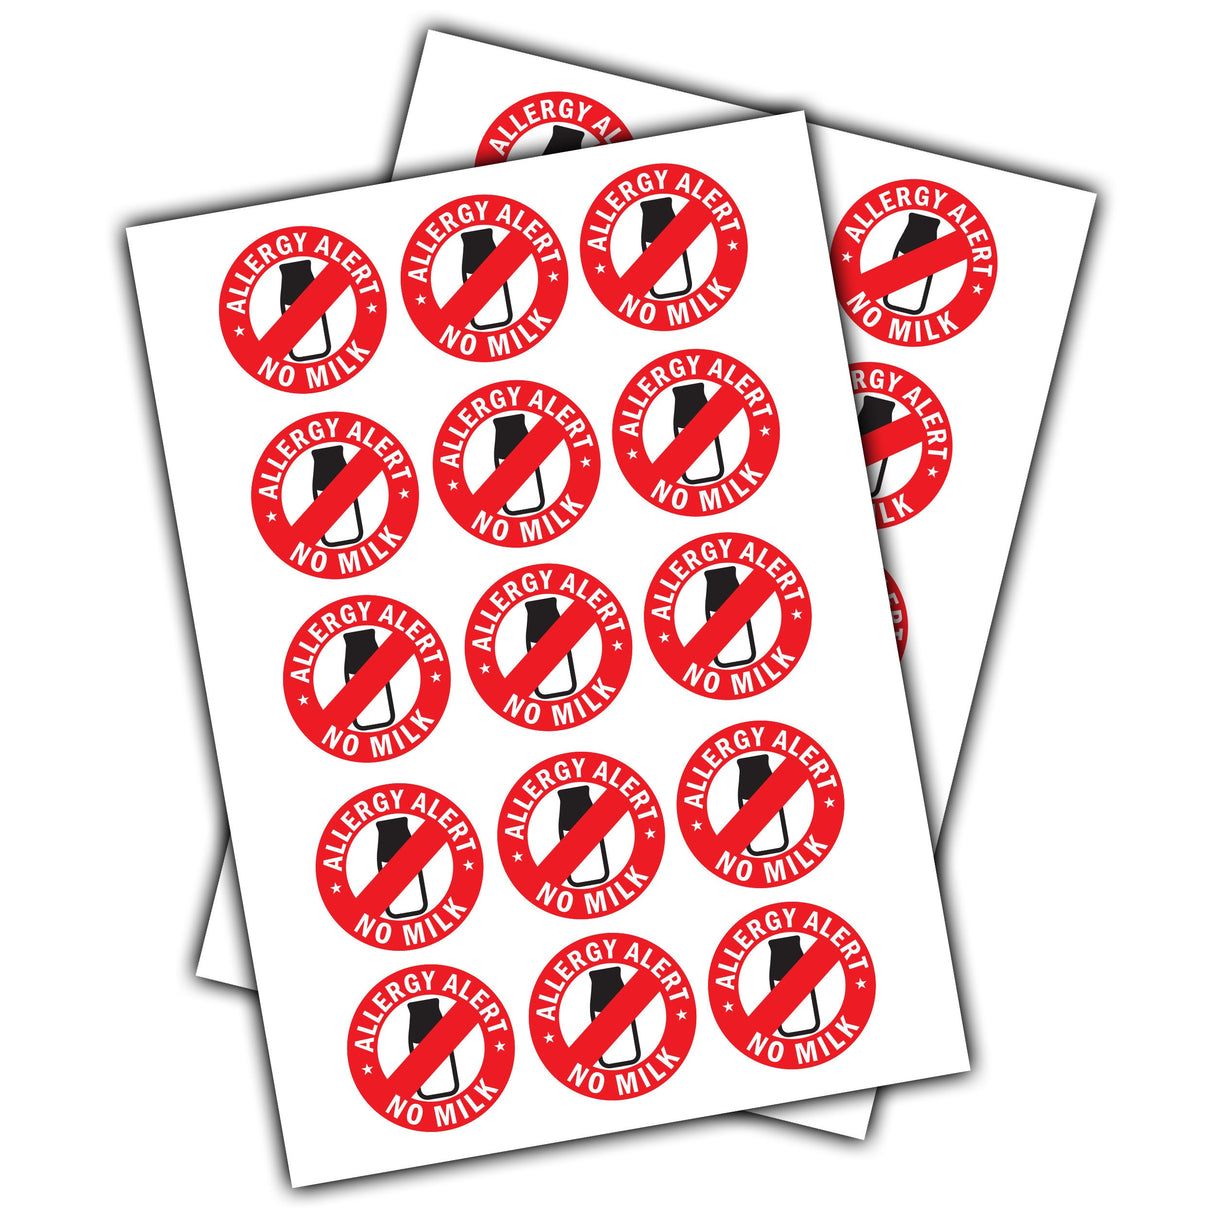 Allergy Alert Milk Stickers - Safety Decals for Food Sensitivity